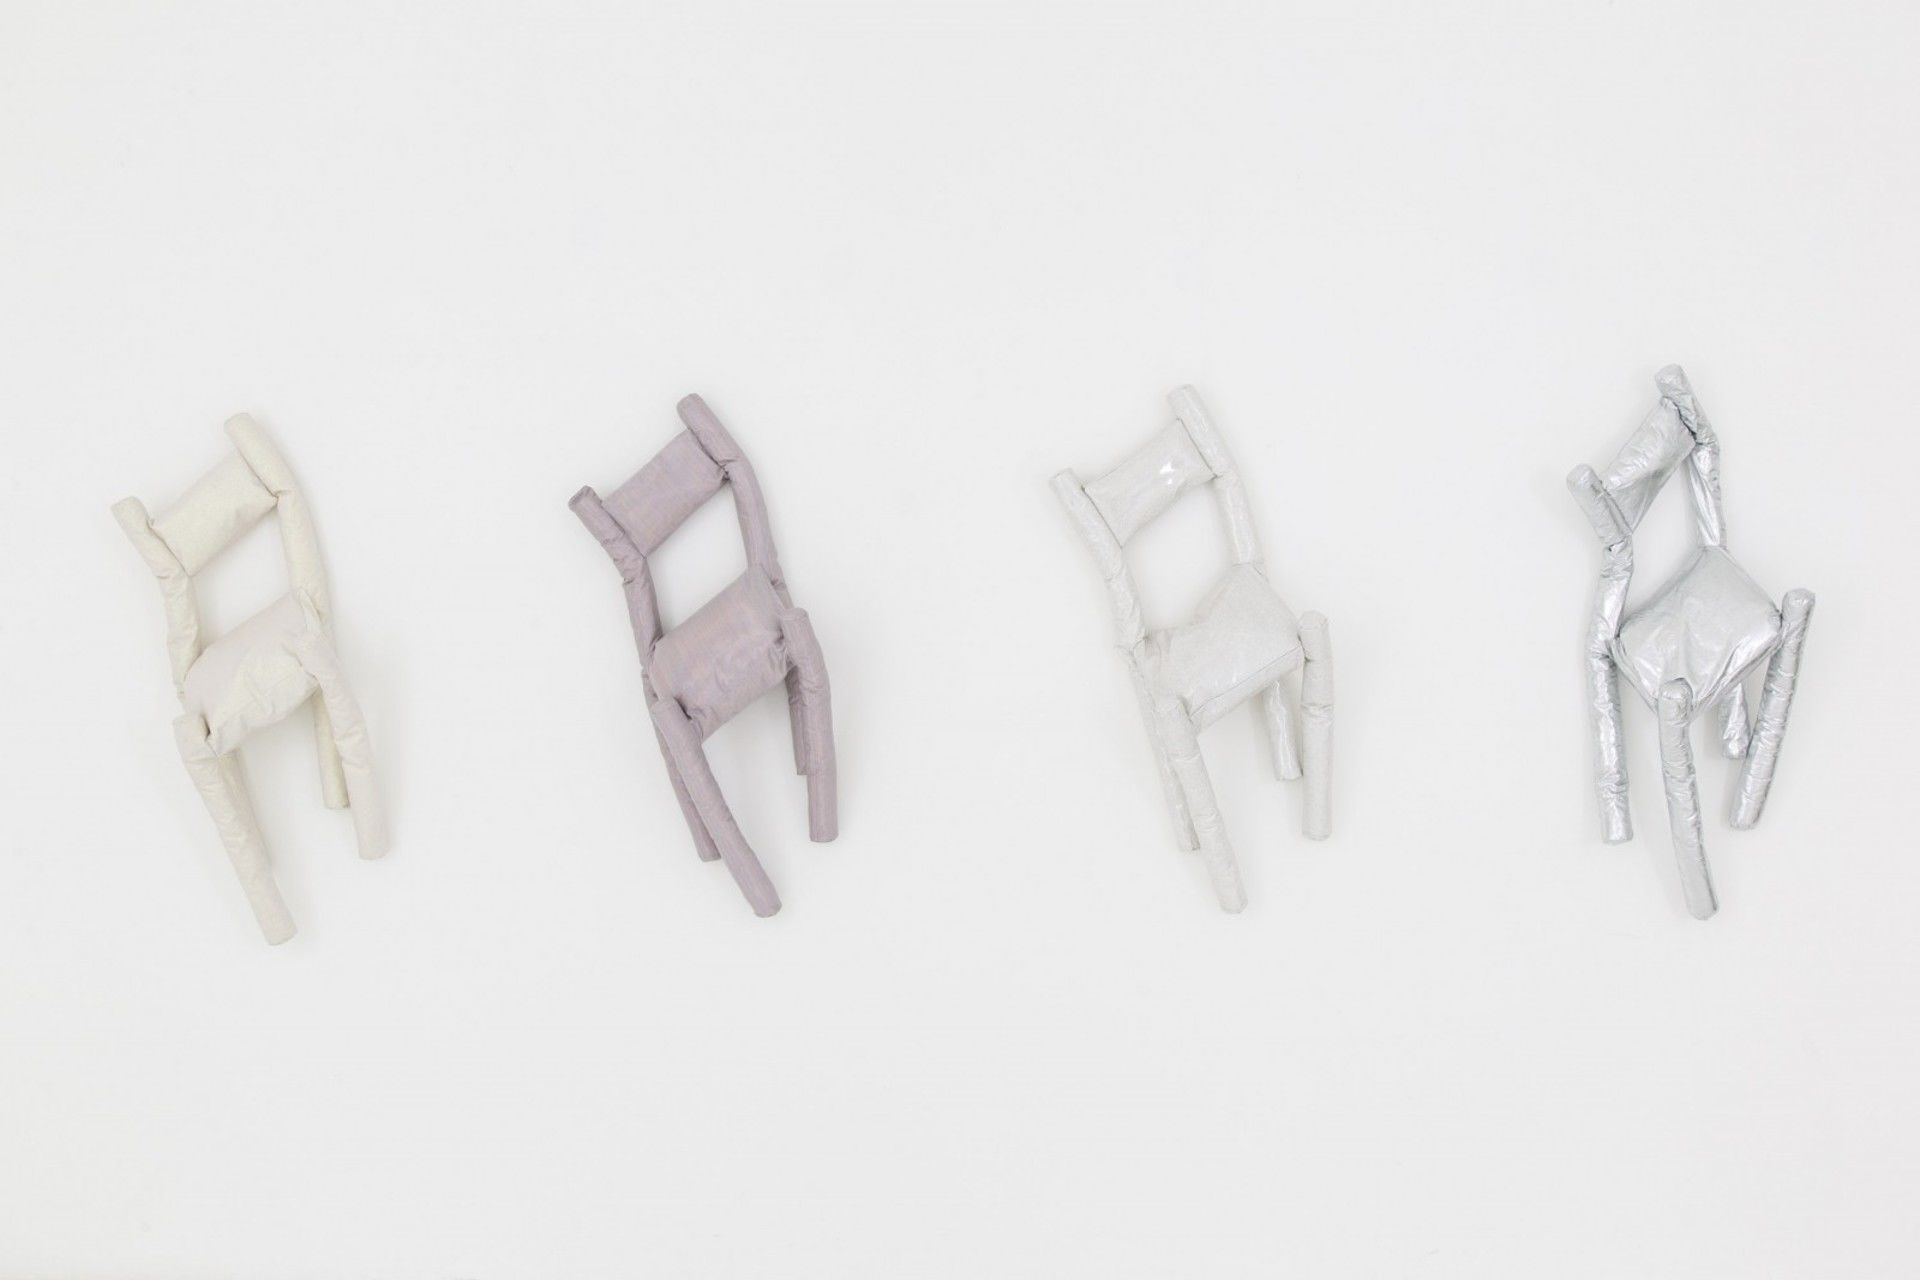 Three Katie Stout chair sculptures installed at Gallery Diet, Miami 2015.